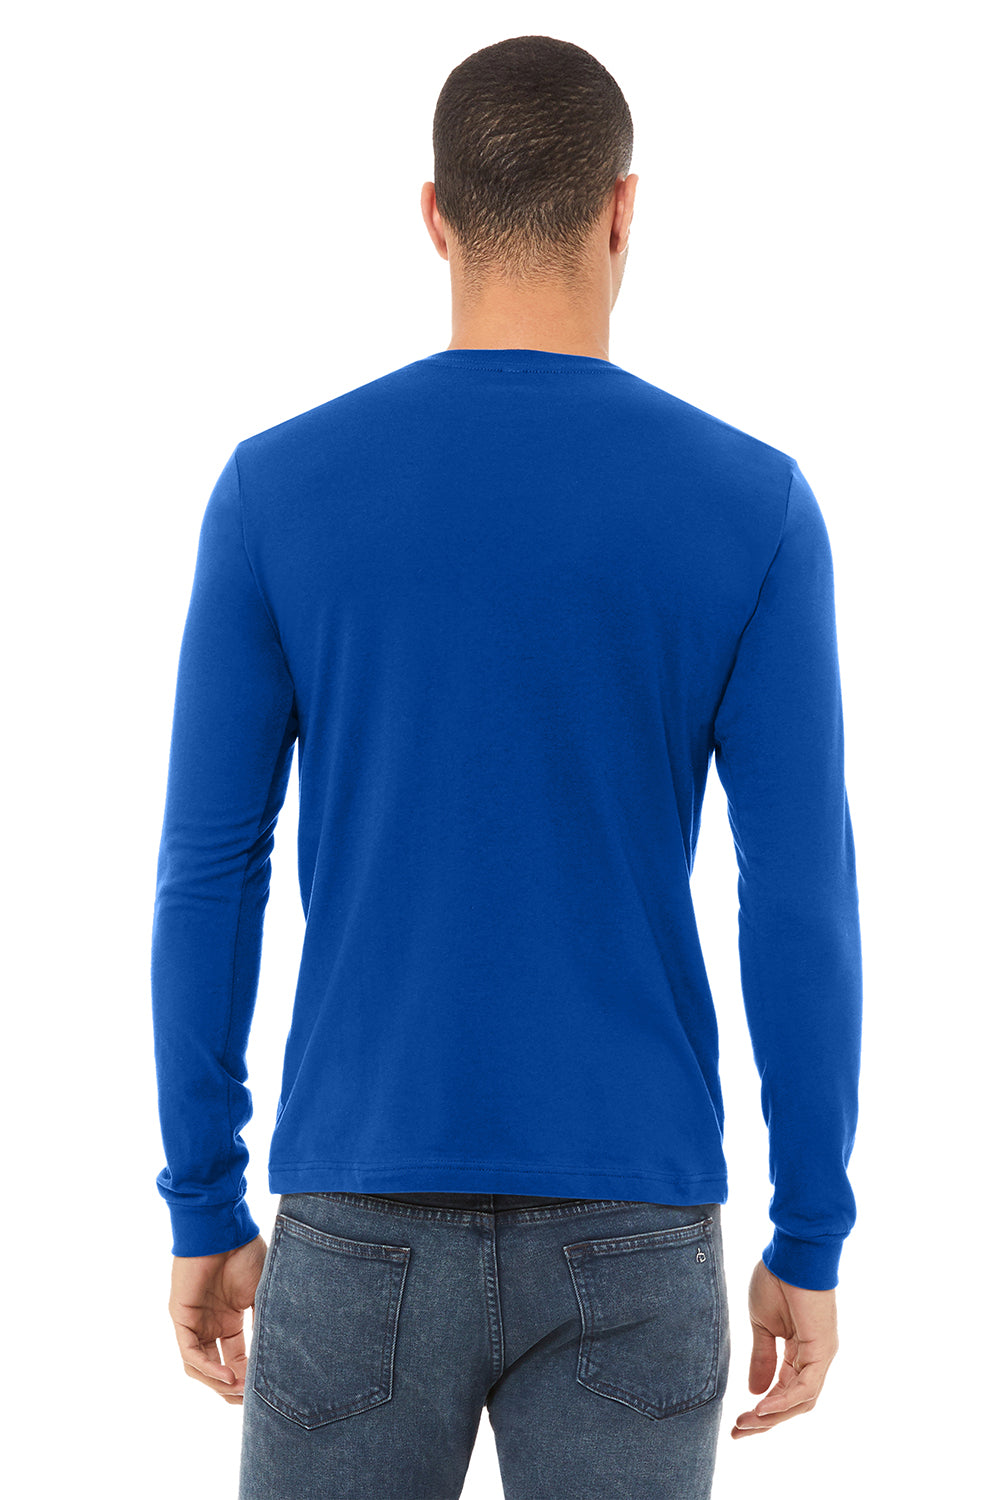 Bella + Canvas BC3501/3501 Mens Jersey Long Sleeve Crewneck T-Shirt True Royal Blue Model Back